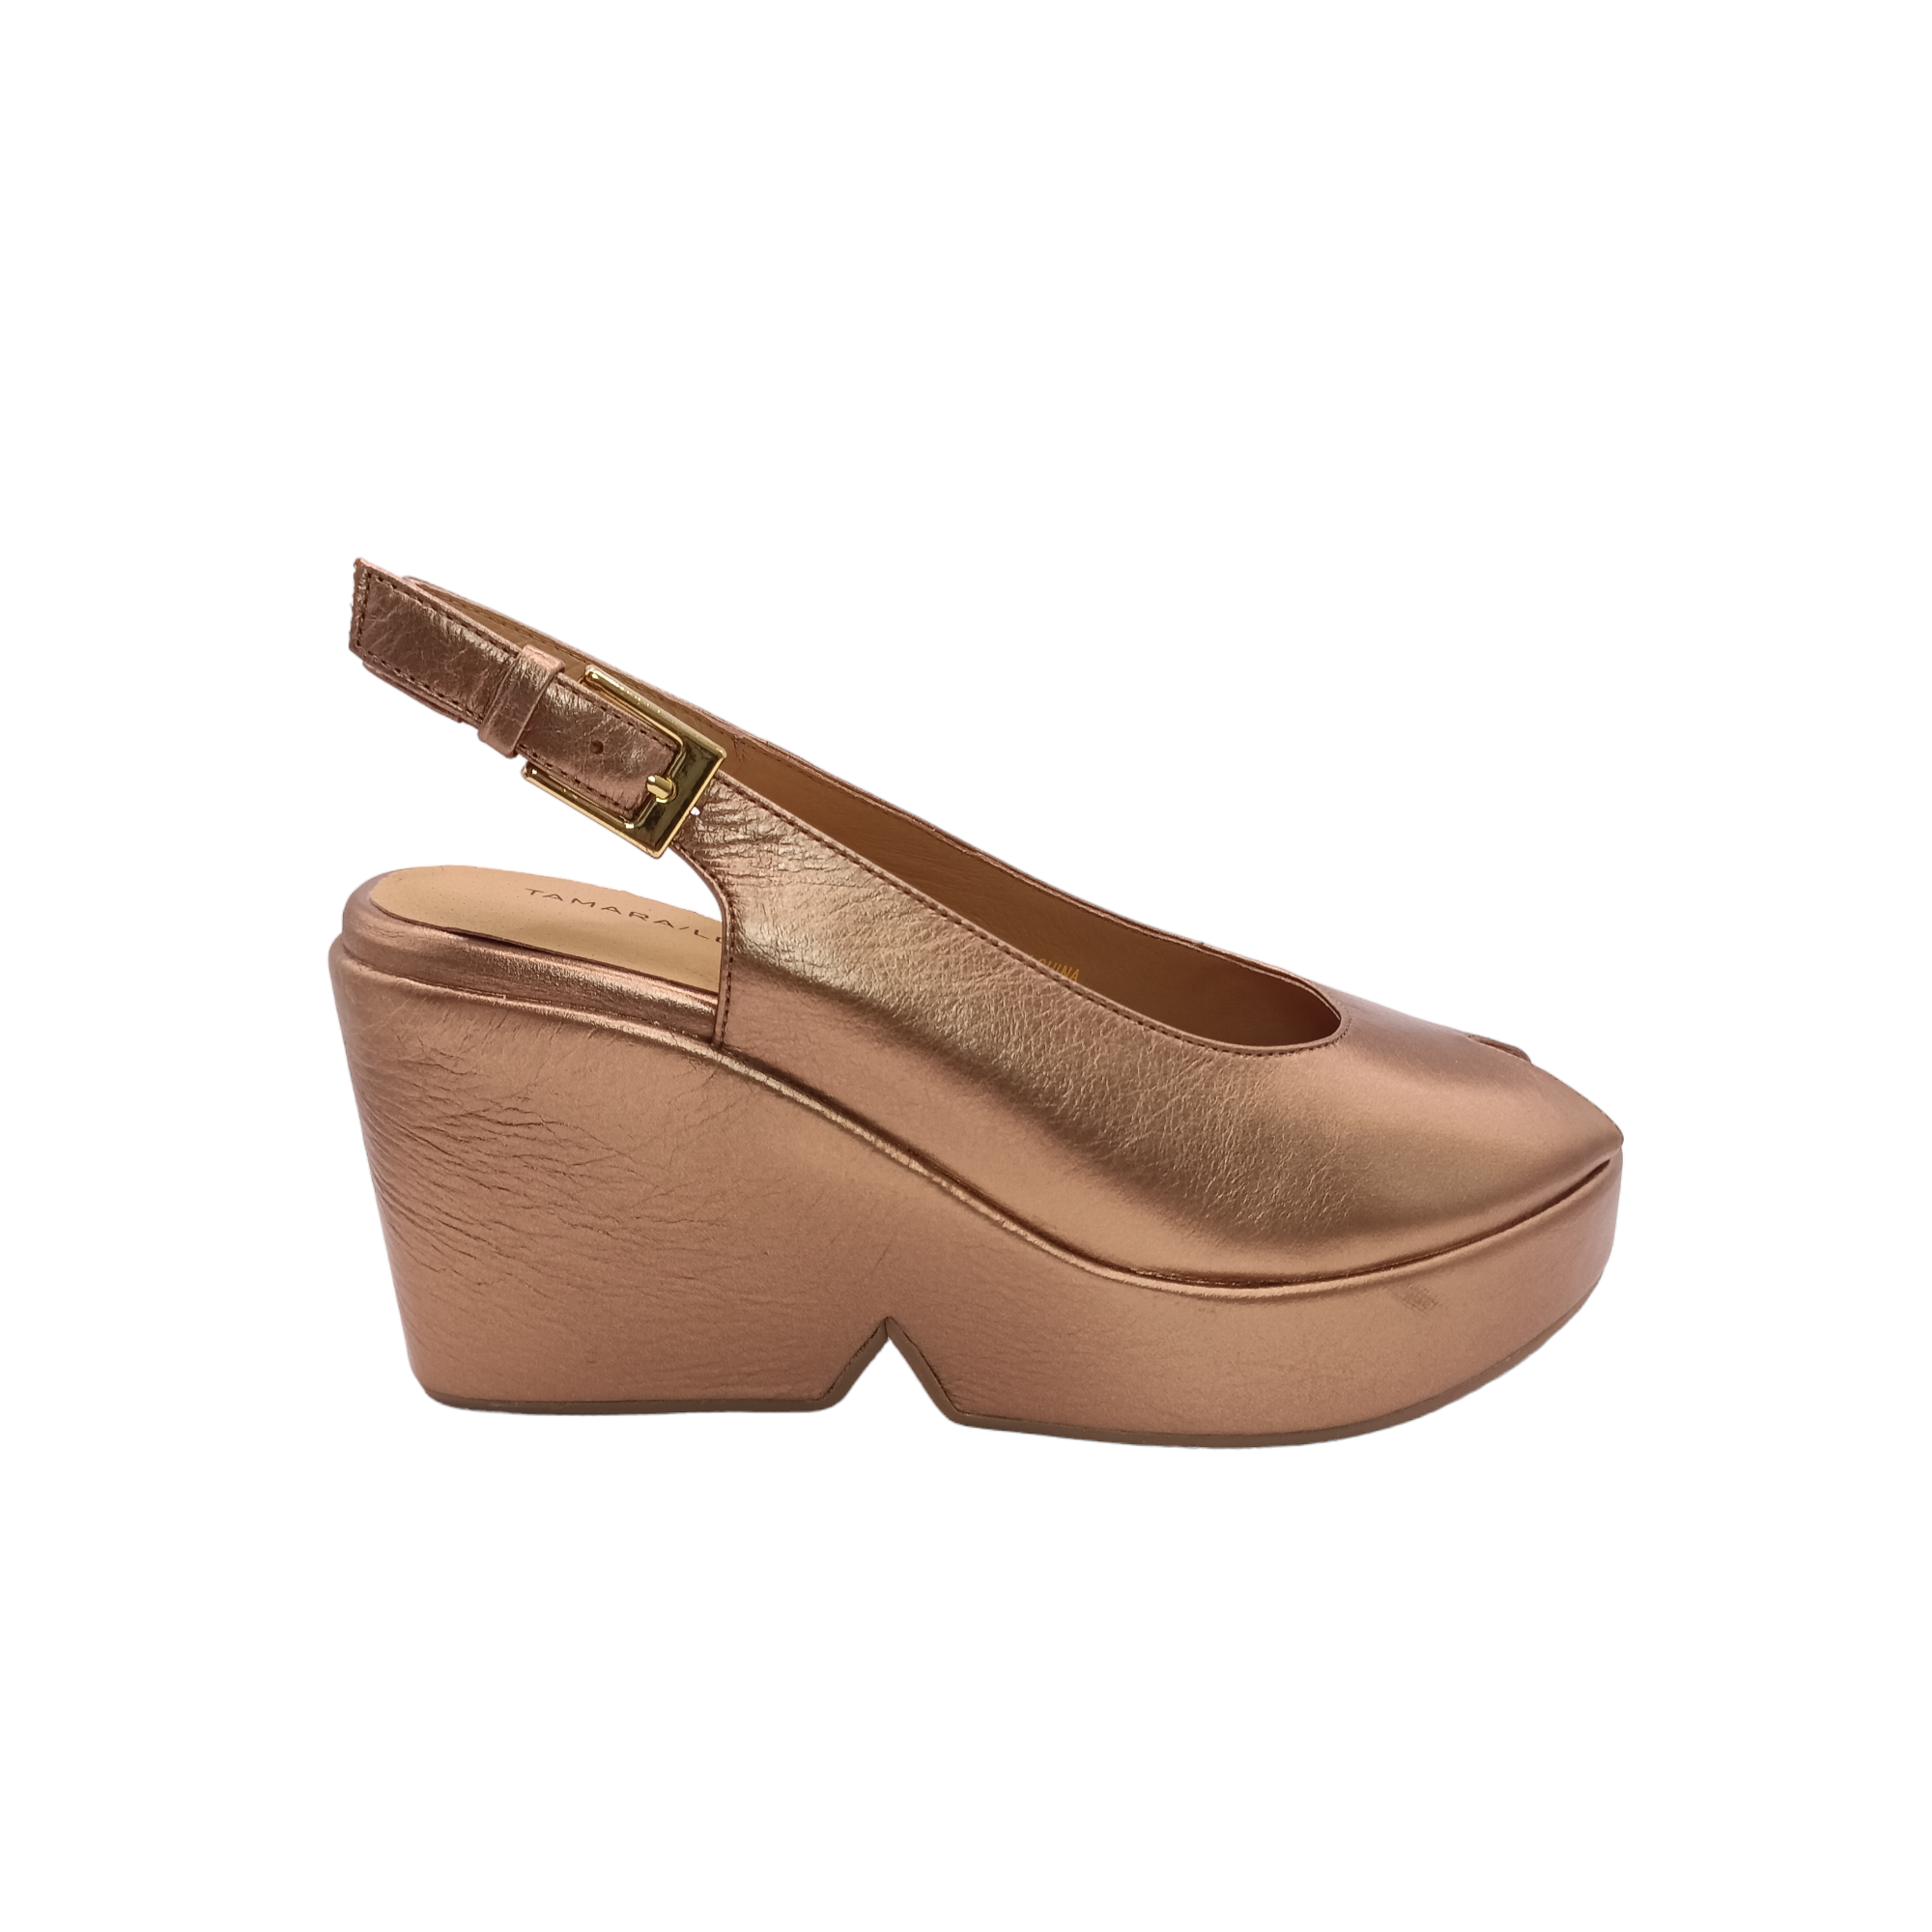 Believer - shoe&me - Tamara - Wedges - Platform, Sandals, Summer, Wedges, Womens